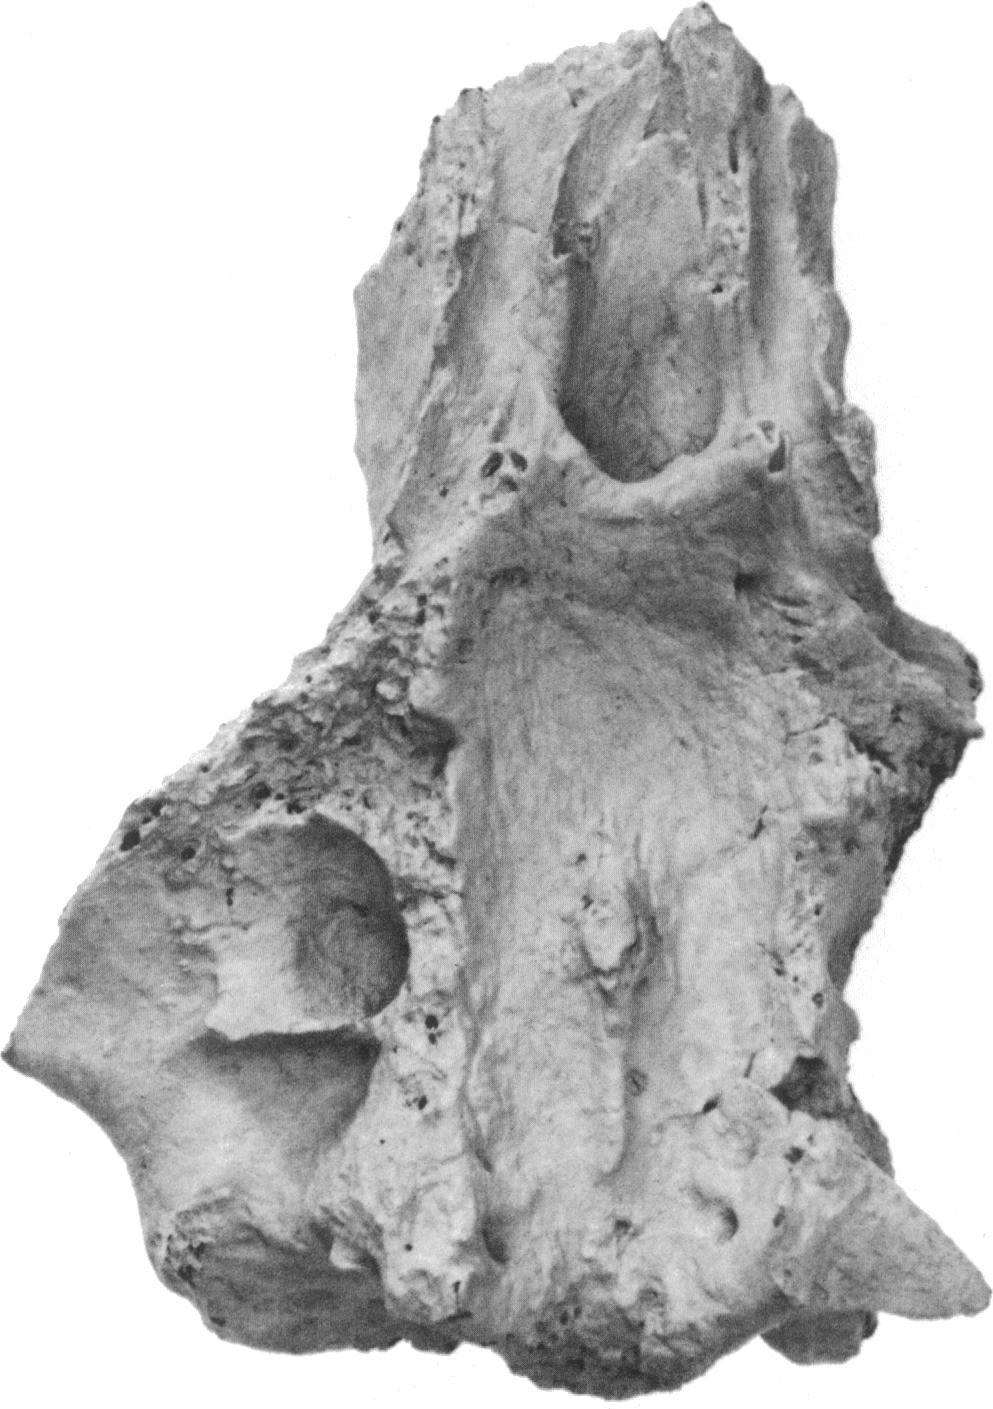 16 AMERICAN MUSEUM NOVITATES NO. 2737 z,. 7. 7, P4" A-1 0t'*?7M r *r V,..LN' N.. V., FIG. 11. Dorsal view of baenid basicranial fragment (AMNH 8554), same data as figure 9. 28.8 mm. in length. FIG. 10.